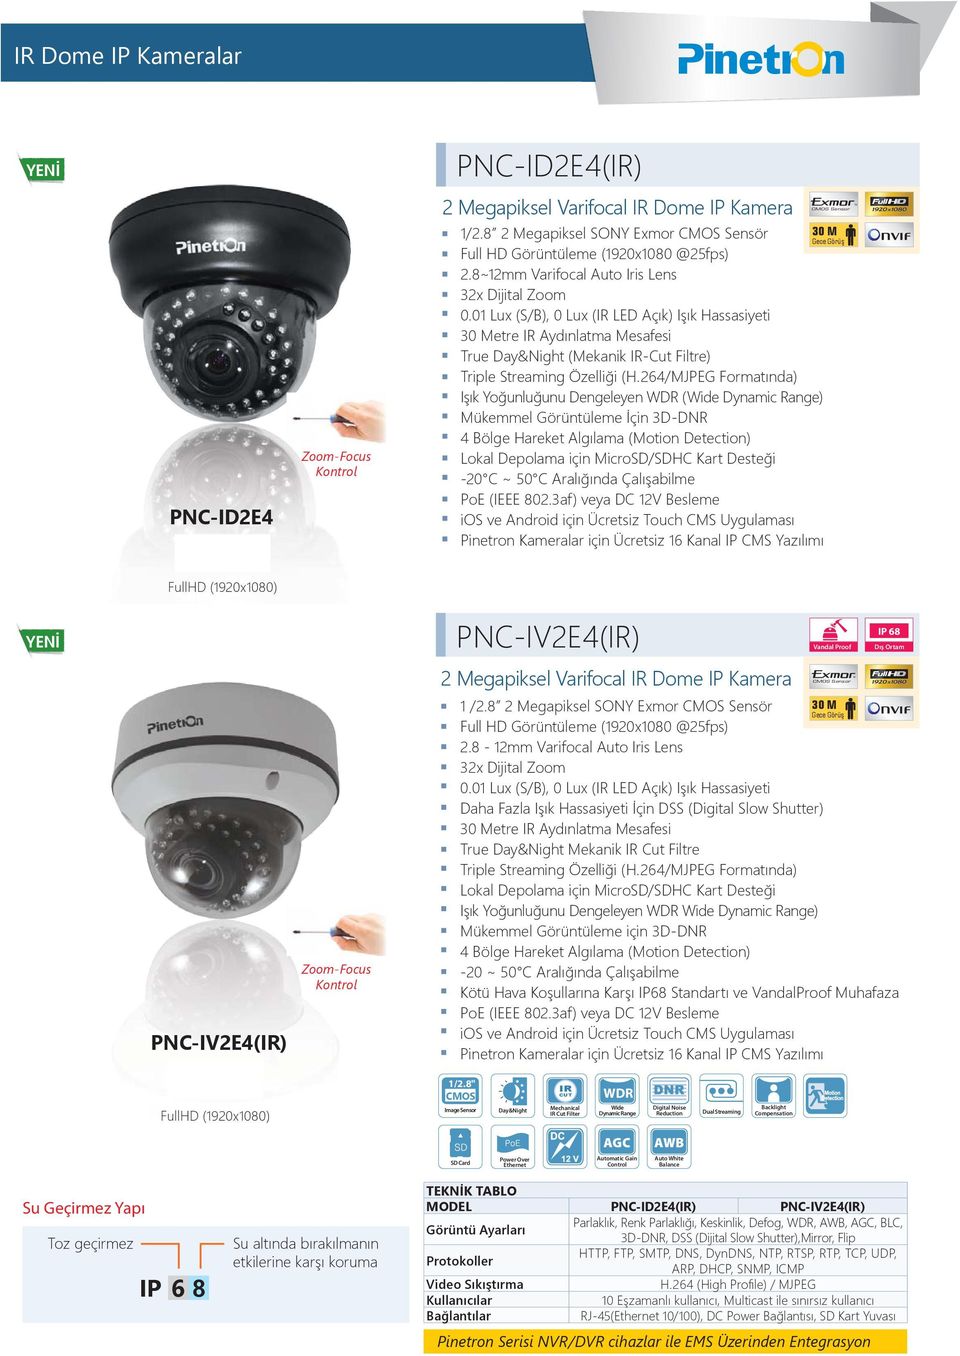 IP 68 2 Megapiksel Varifocal Dome IP Kamera PNC-IV2E4() 760 $ Zoom-Focus Kontrol 1 /2.8 2 Megapiksel SONY Exmor Sensör 30 M 2.8-12mm Varifocal Auto Iris Lens 0.